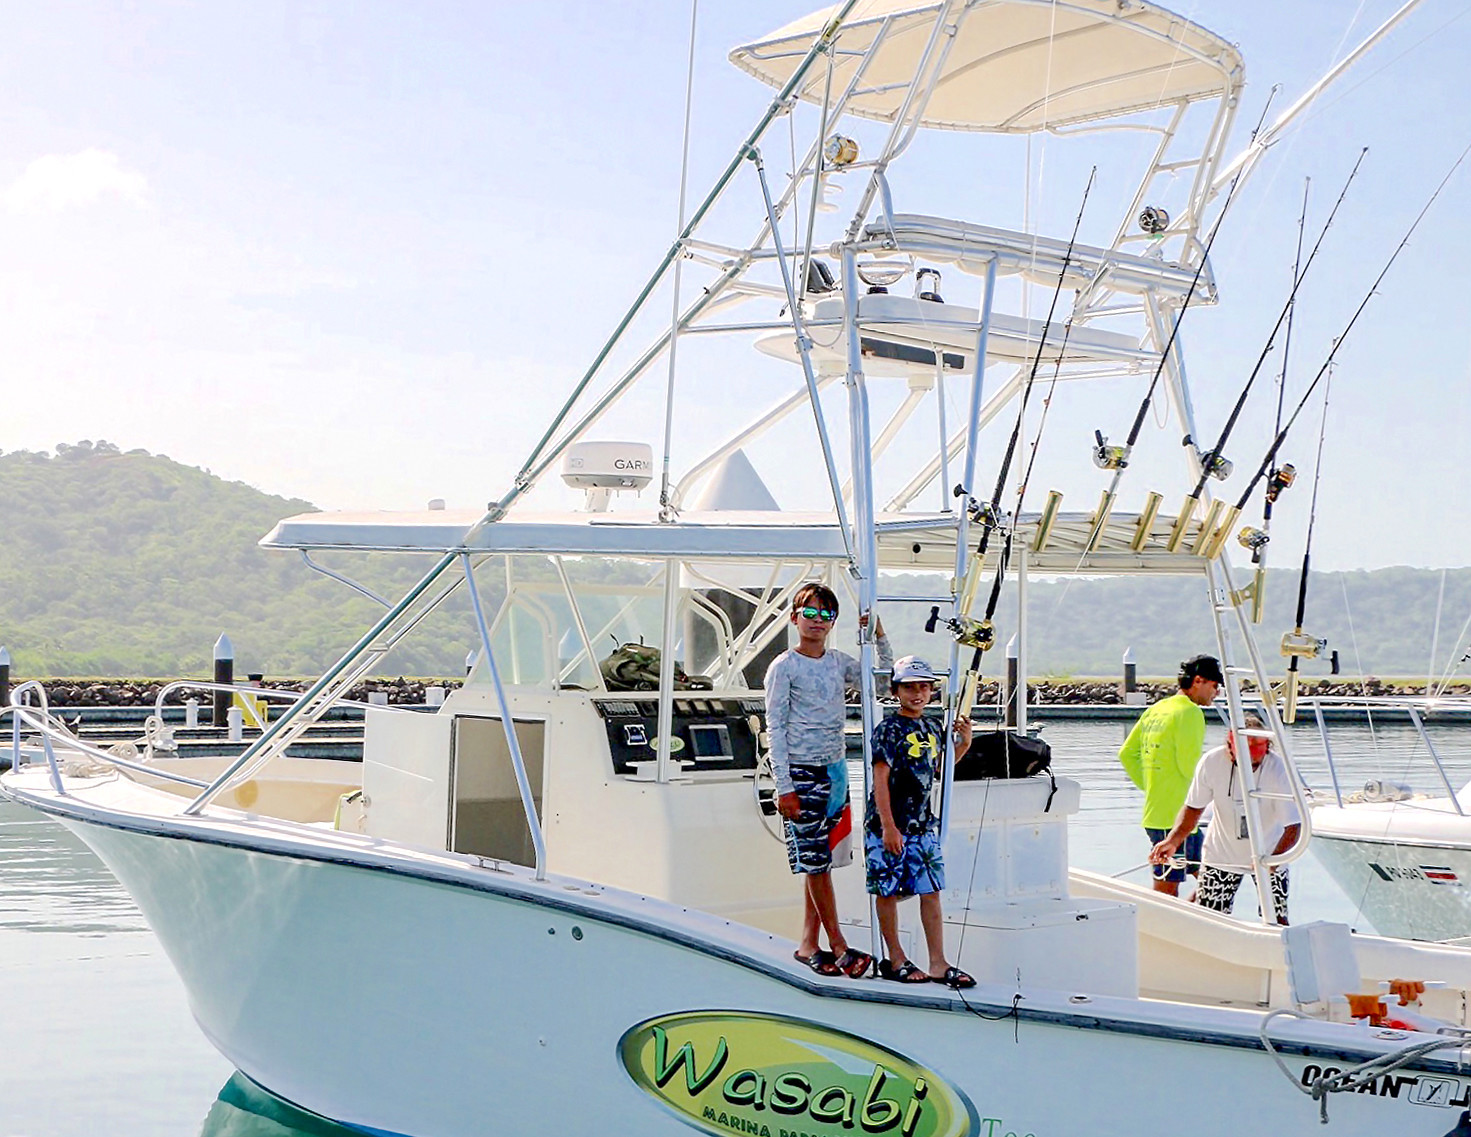 Wasabi Fishing - The Boat